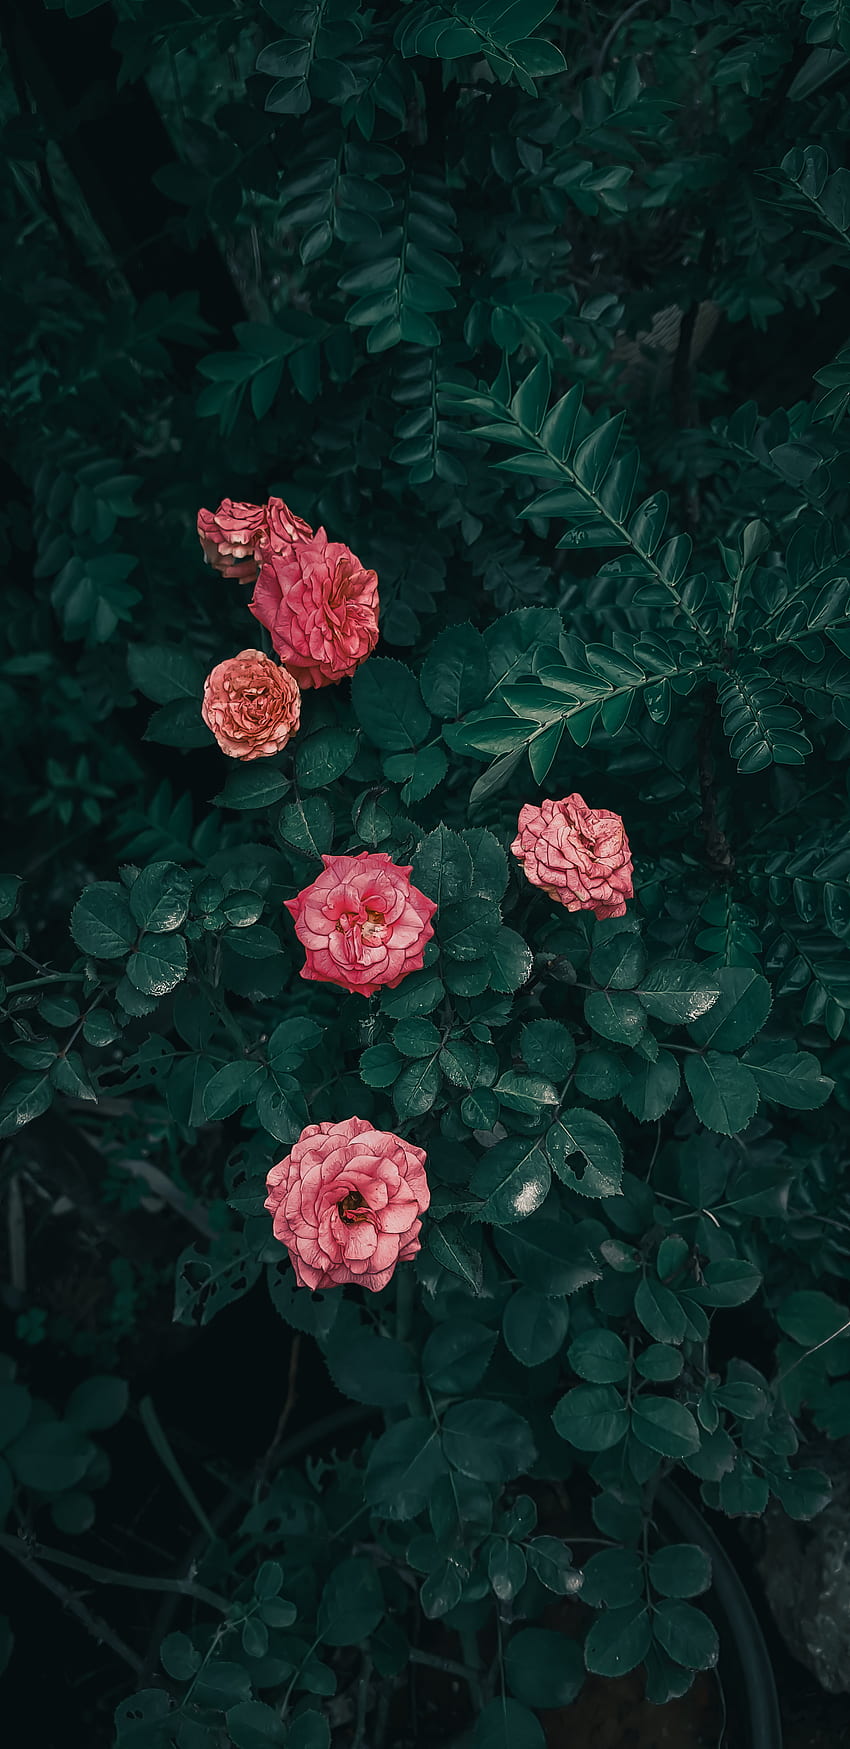 Rose, mawar hybrid tea, merah, pink, hijau, pinkrose, moody, redrose, ros wallpaper ponsel HD